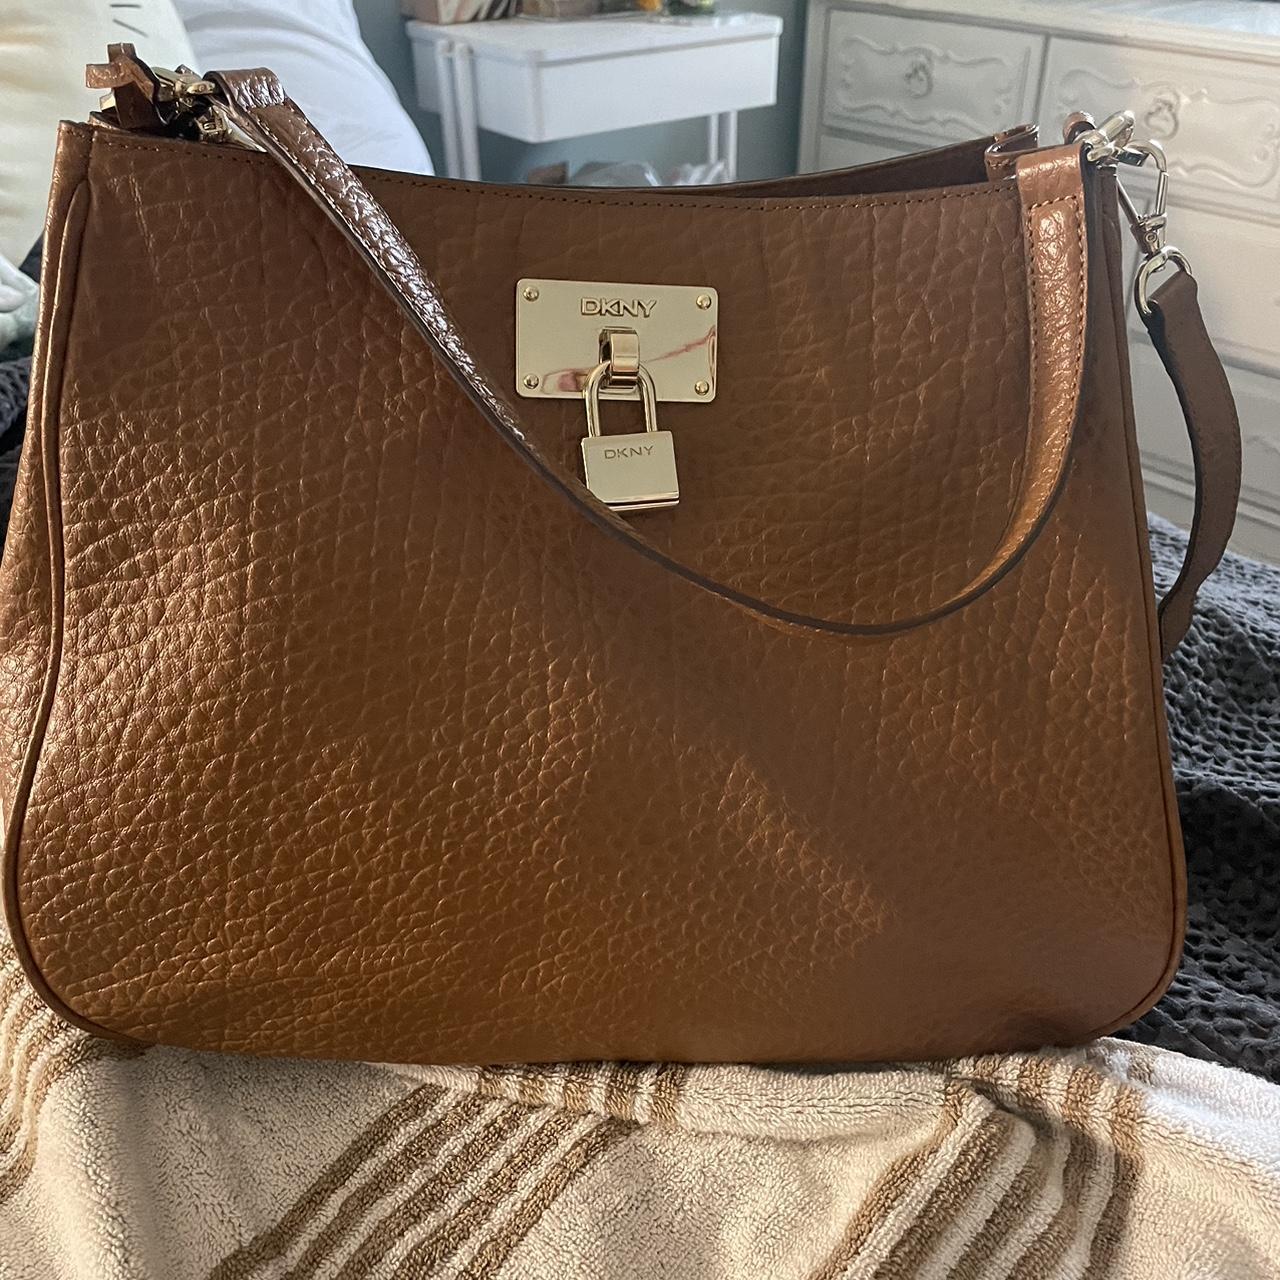 Product Image 1 - DKNY brown bag. Super big